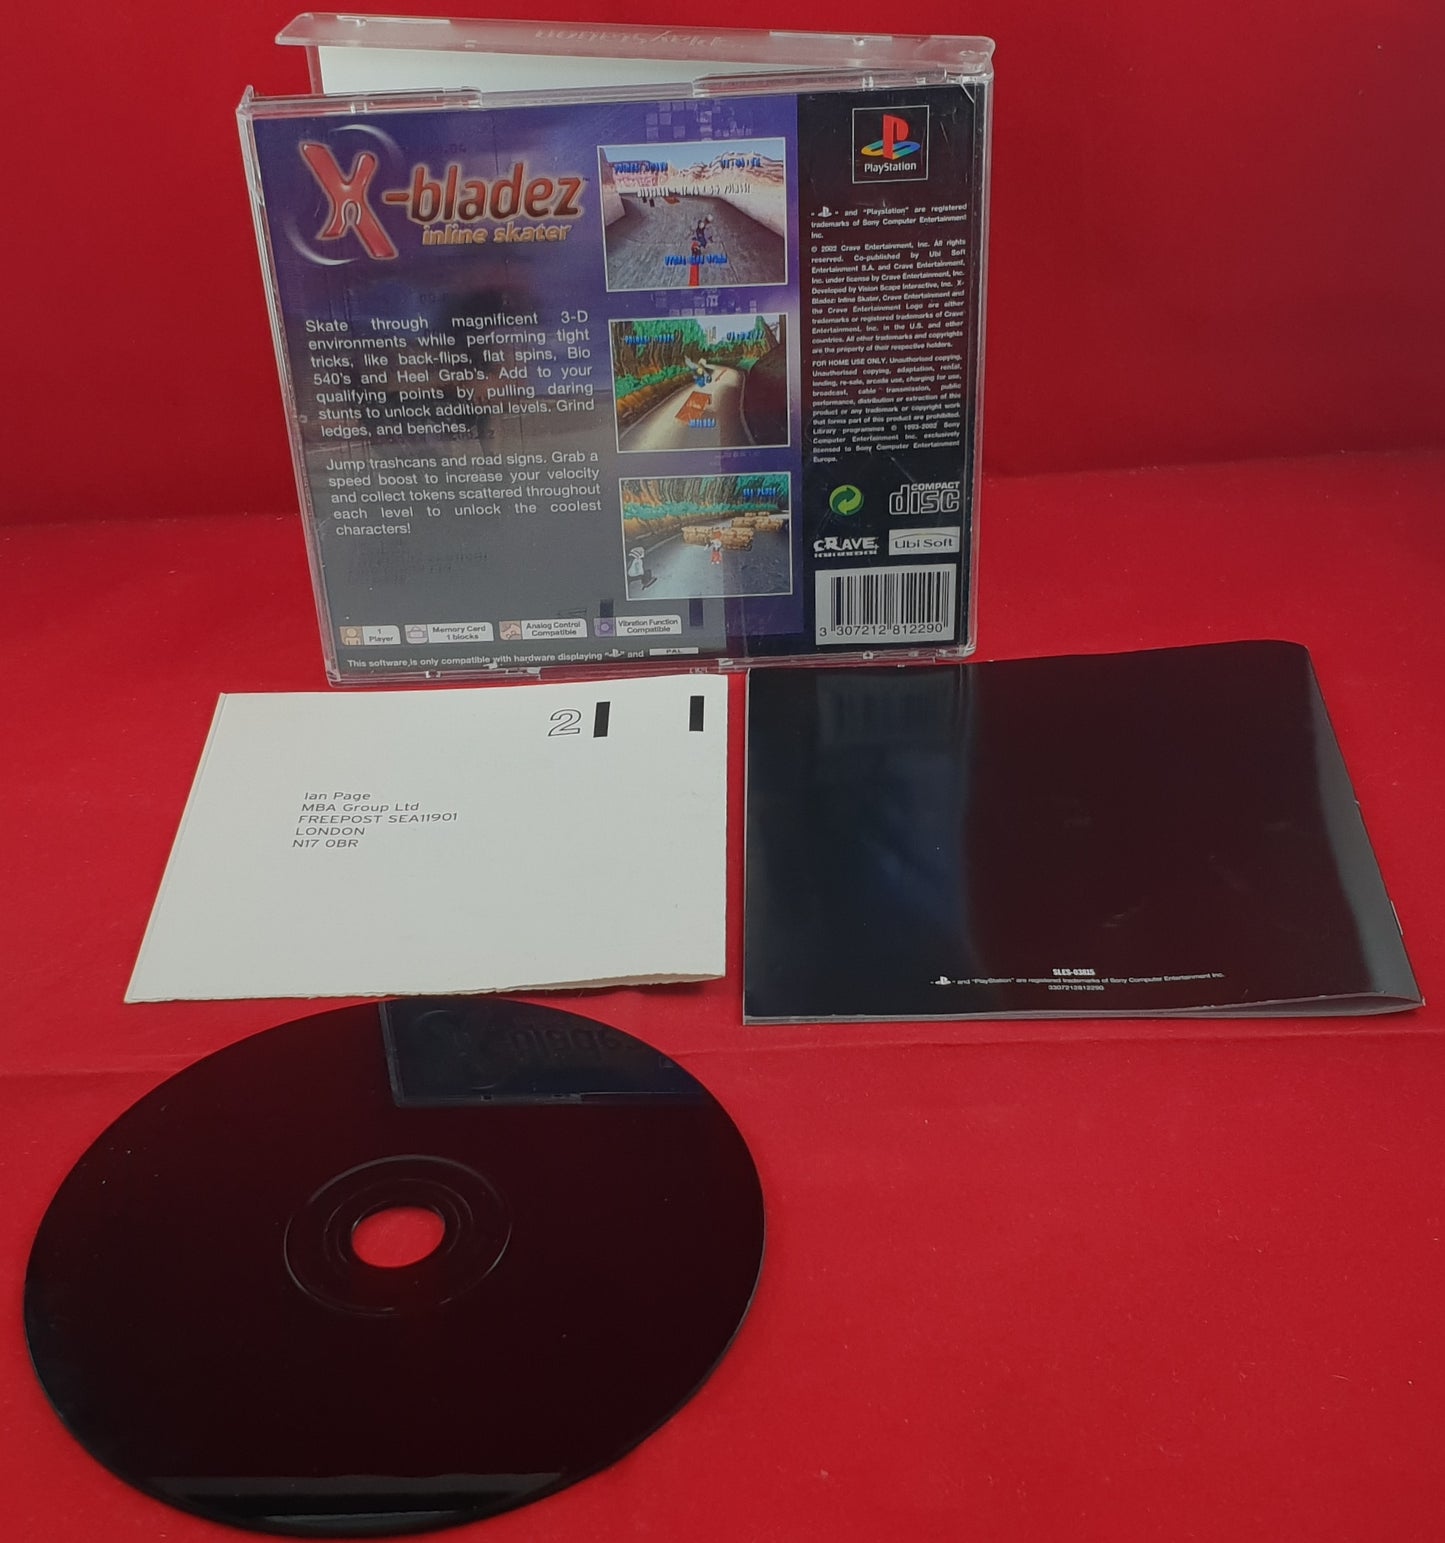 X-Bladez Inline Skater Sony Playstation 1 (PS1) Game